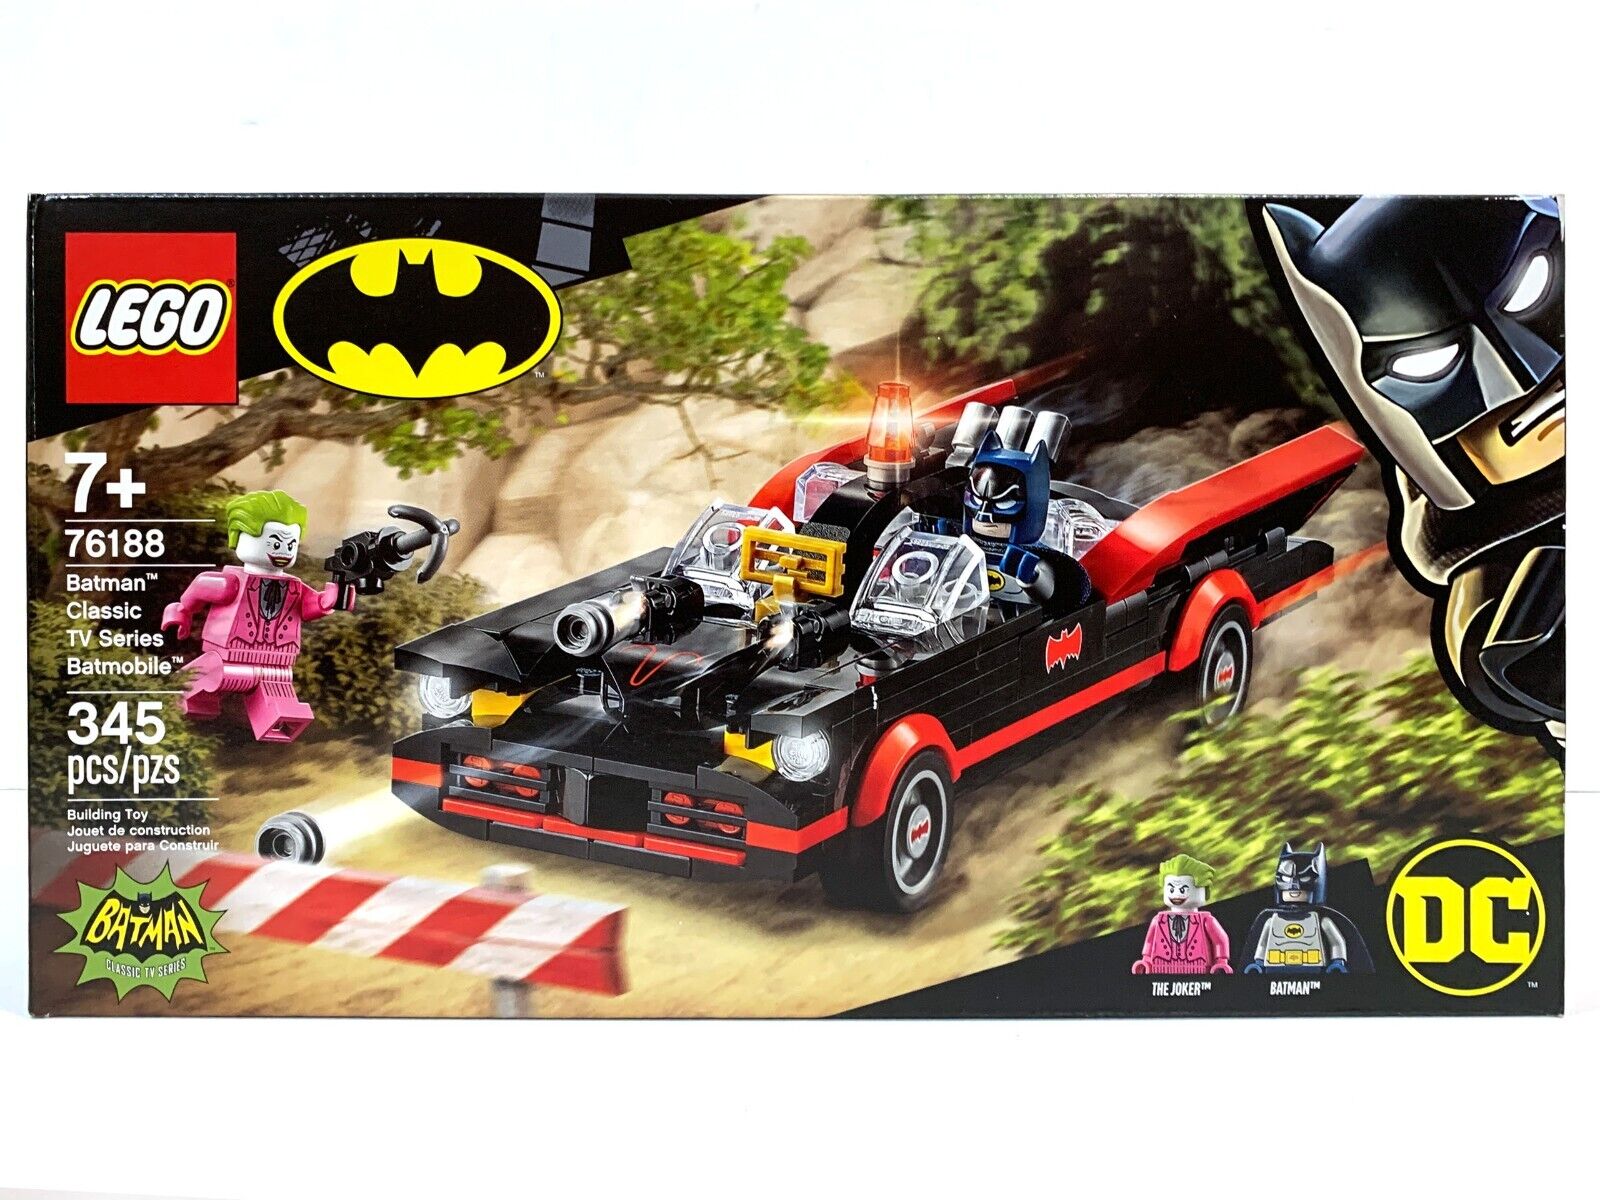 NEW SEALED LEGO DC Batman 716188 Classic TV Series Batmobile RETIRED SET